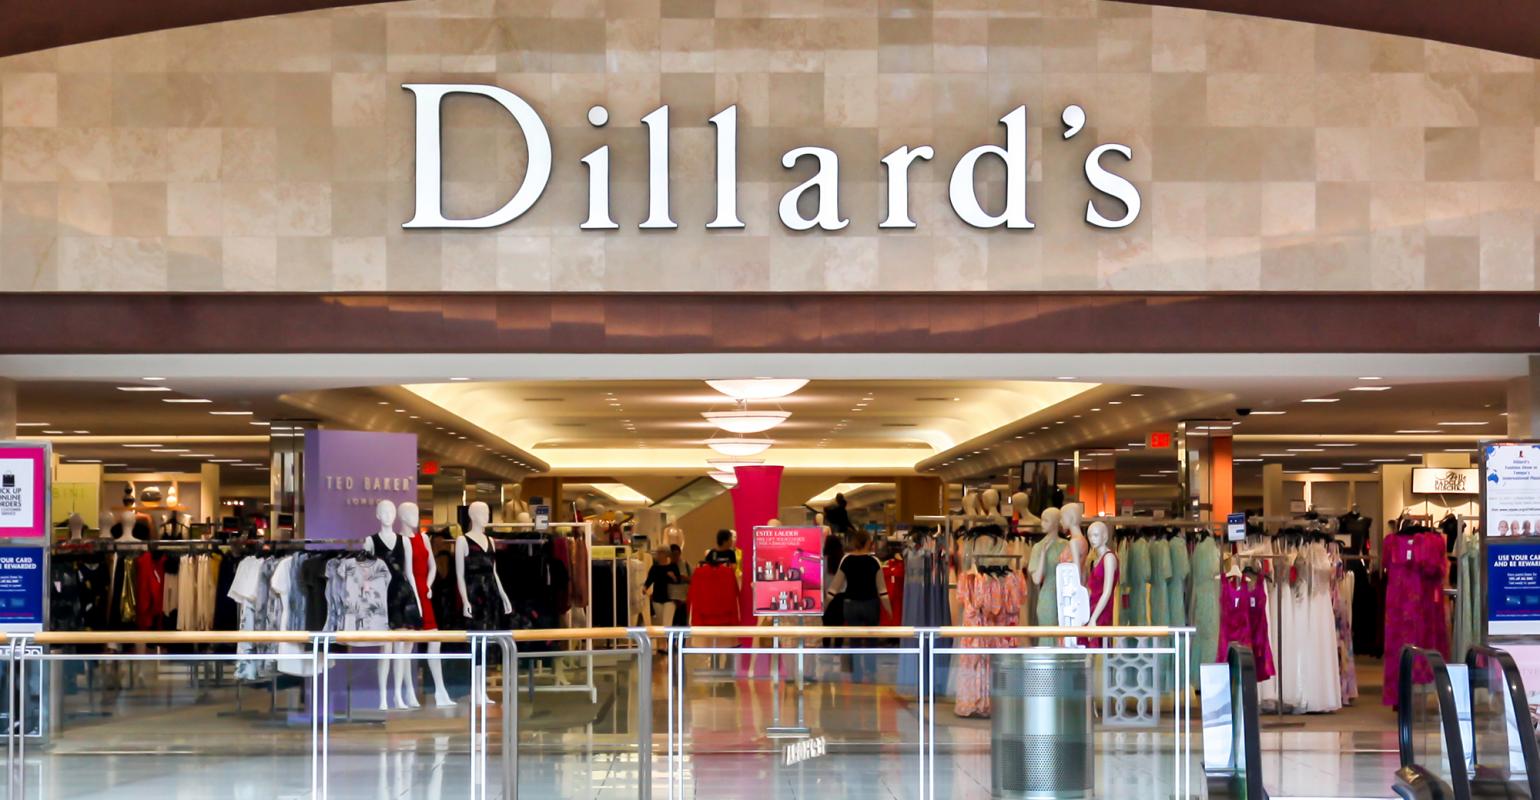 Susan Towns - Store manager - Dillards dept store